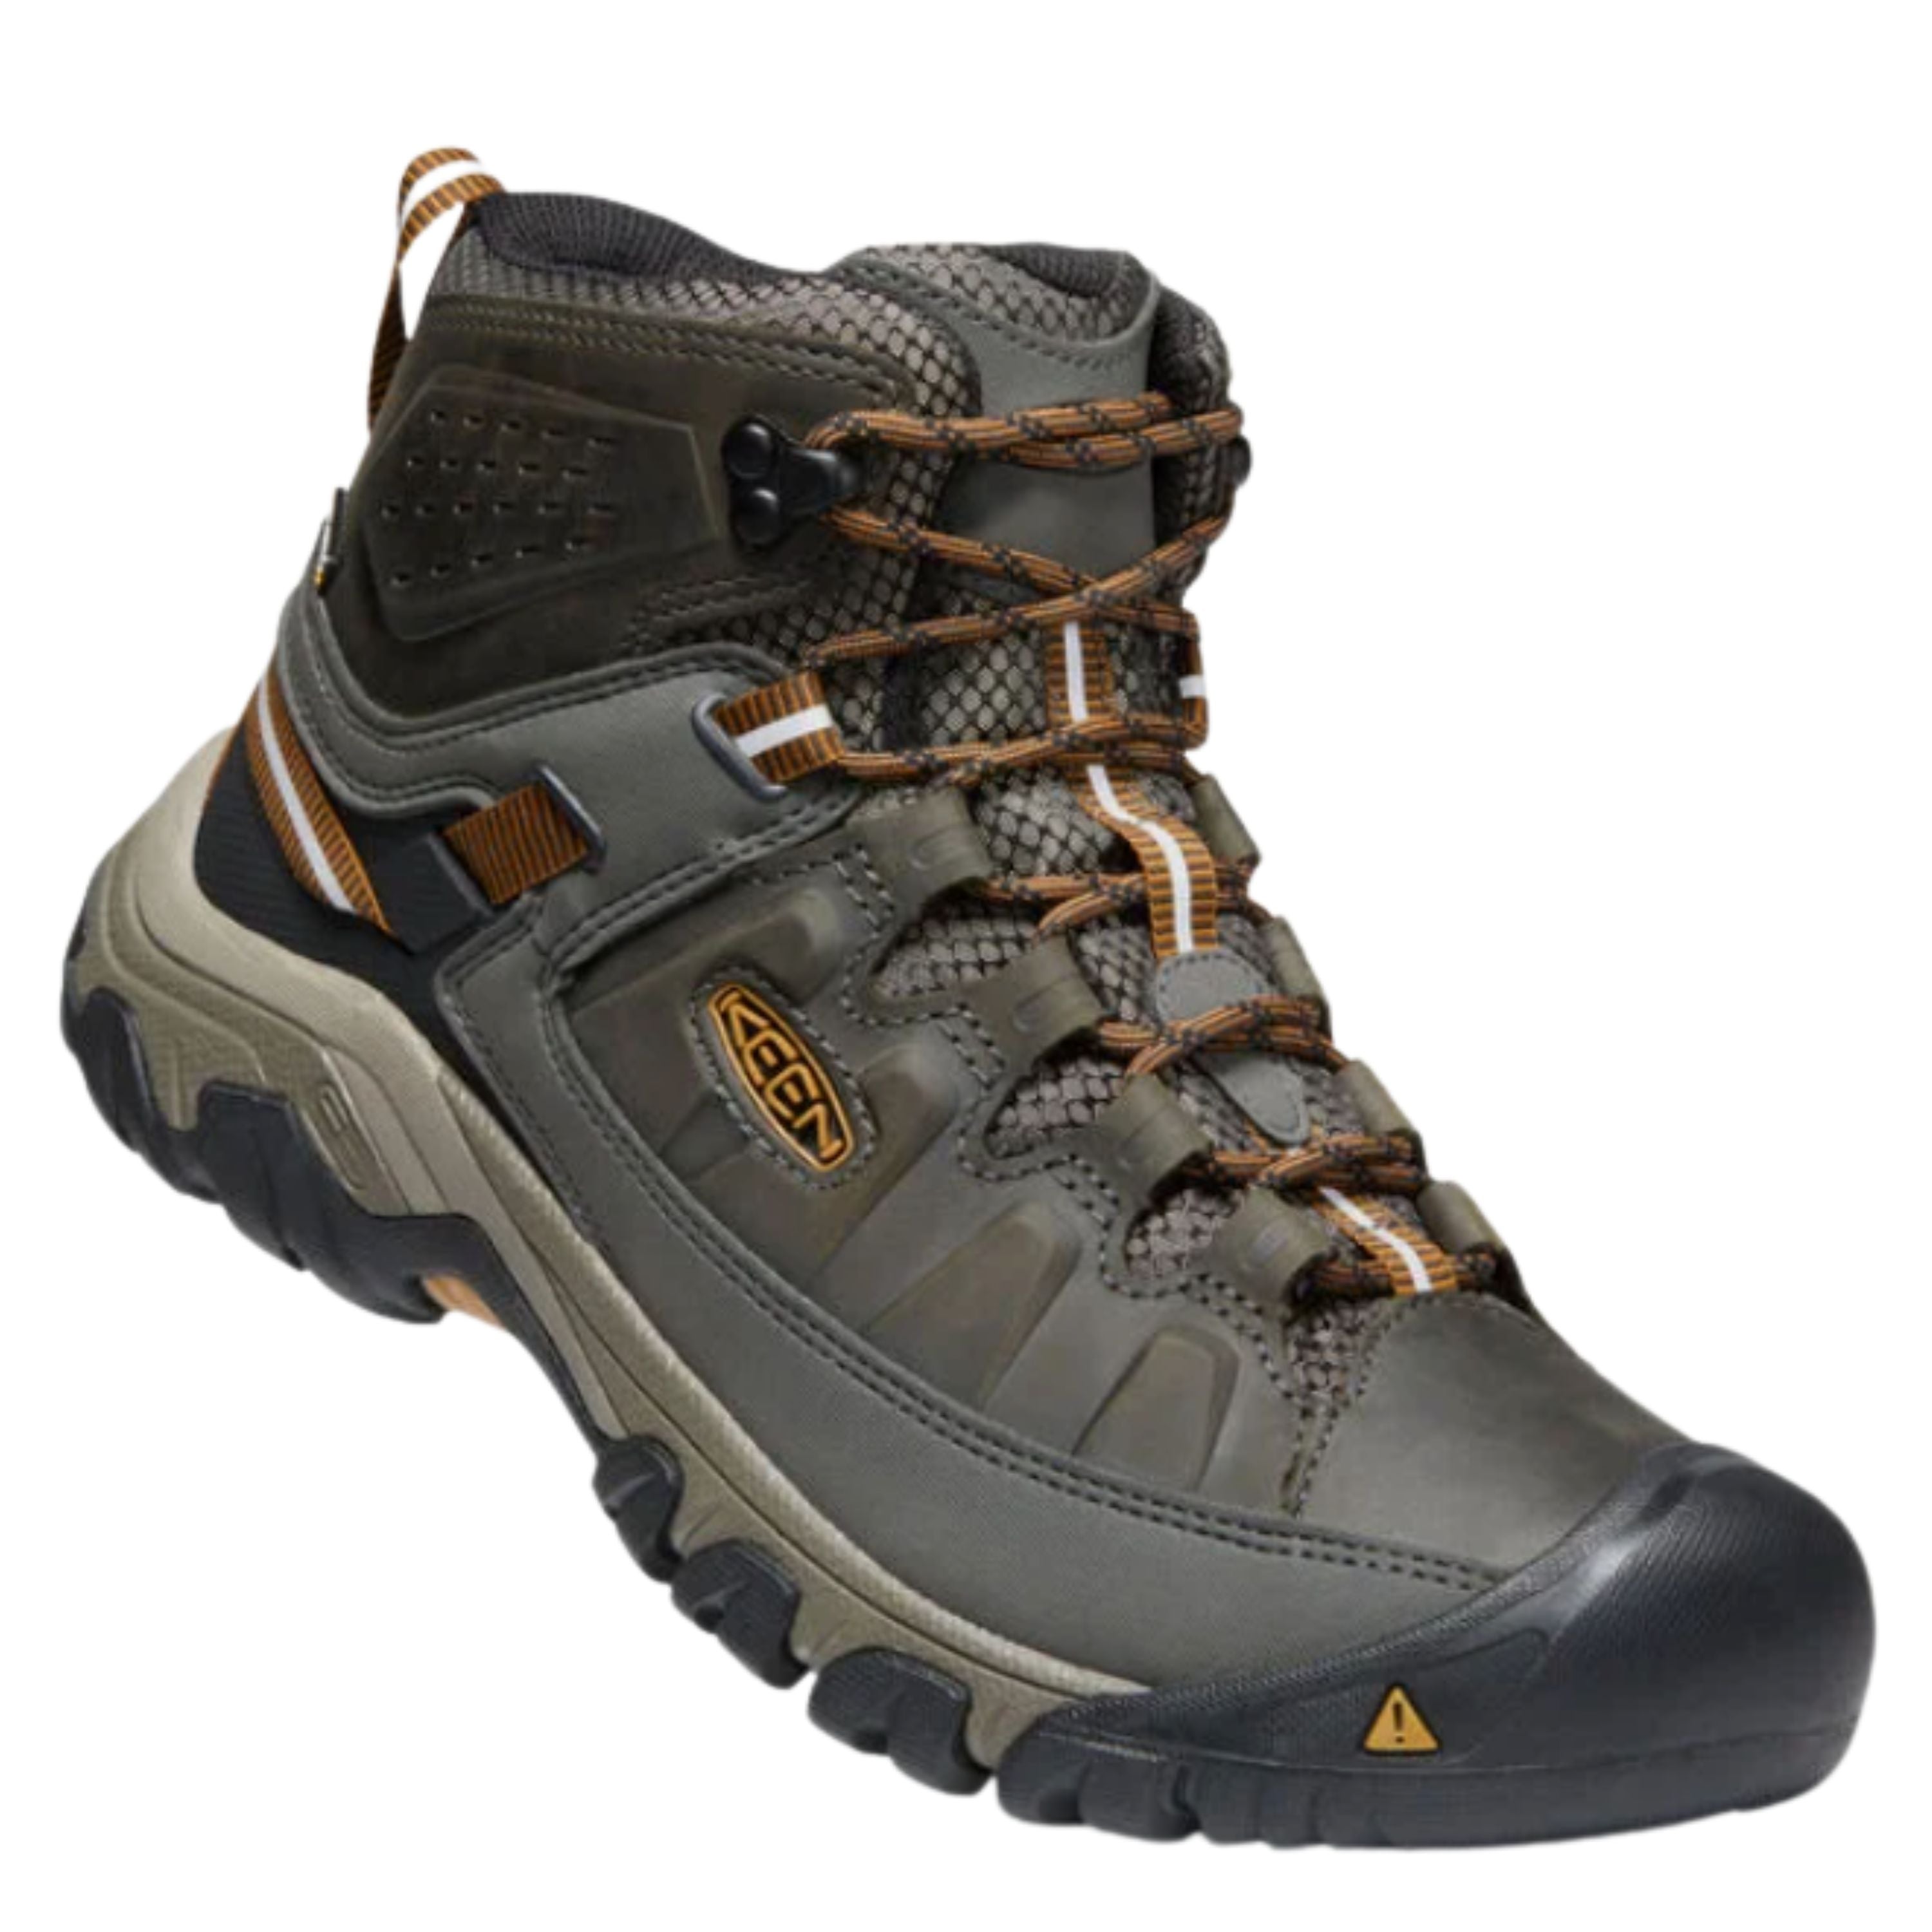 Bottes de randonnée "Targhee III Mid WP" - Homme||"Targhee III Mid WP" hiking boots - Men's